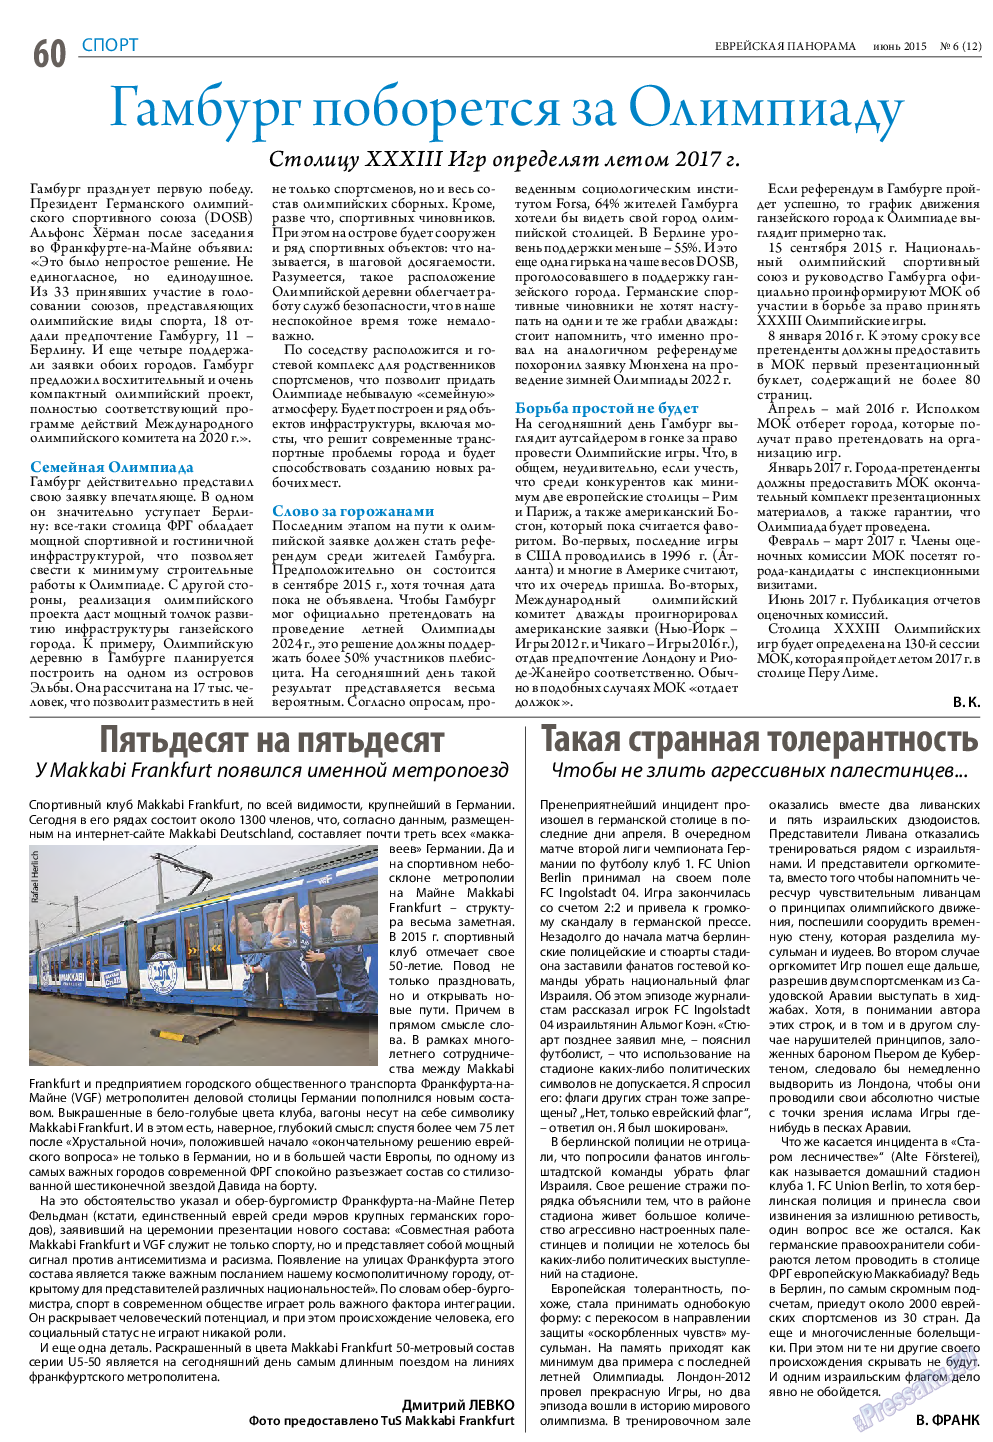 Еврейская панорама, газета. 2015 №6 стр.60